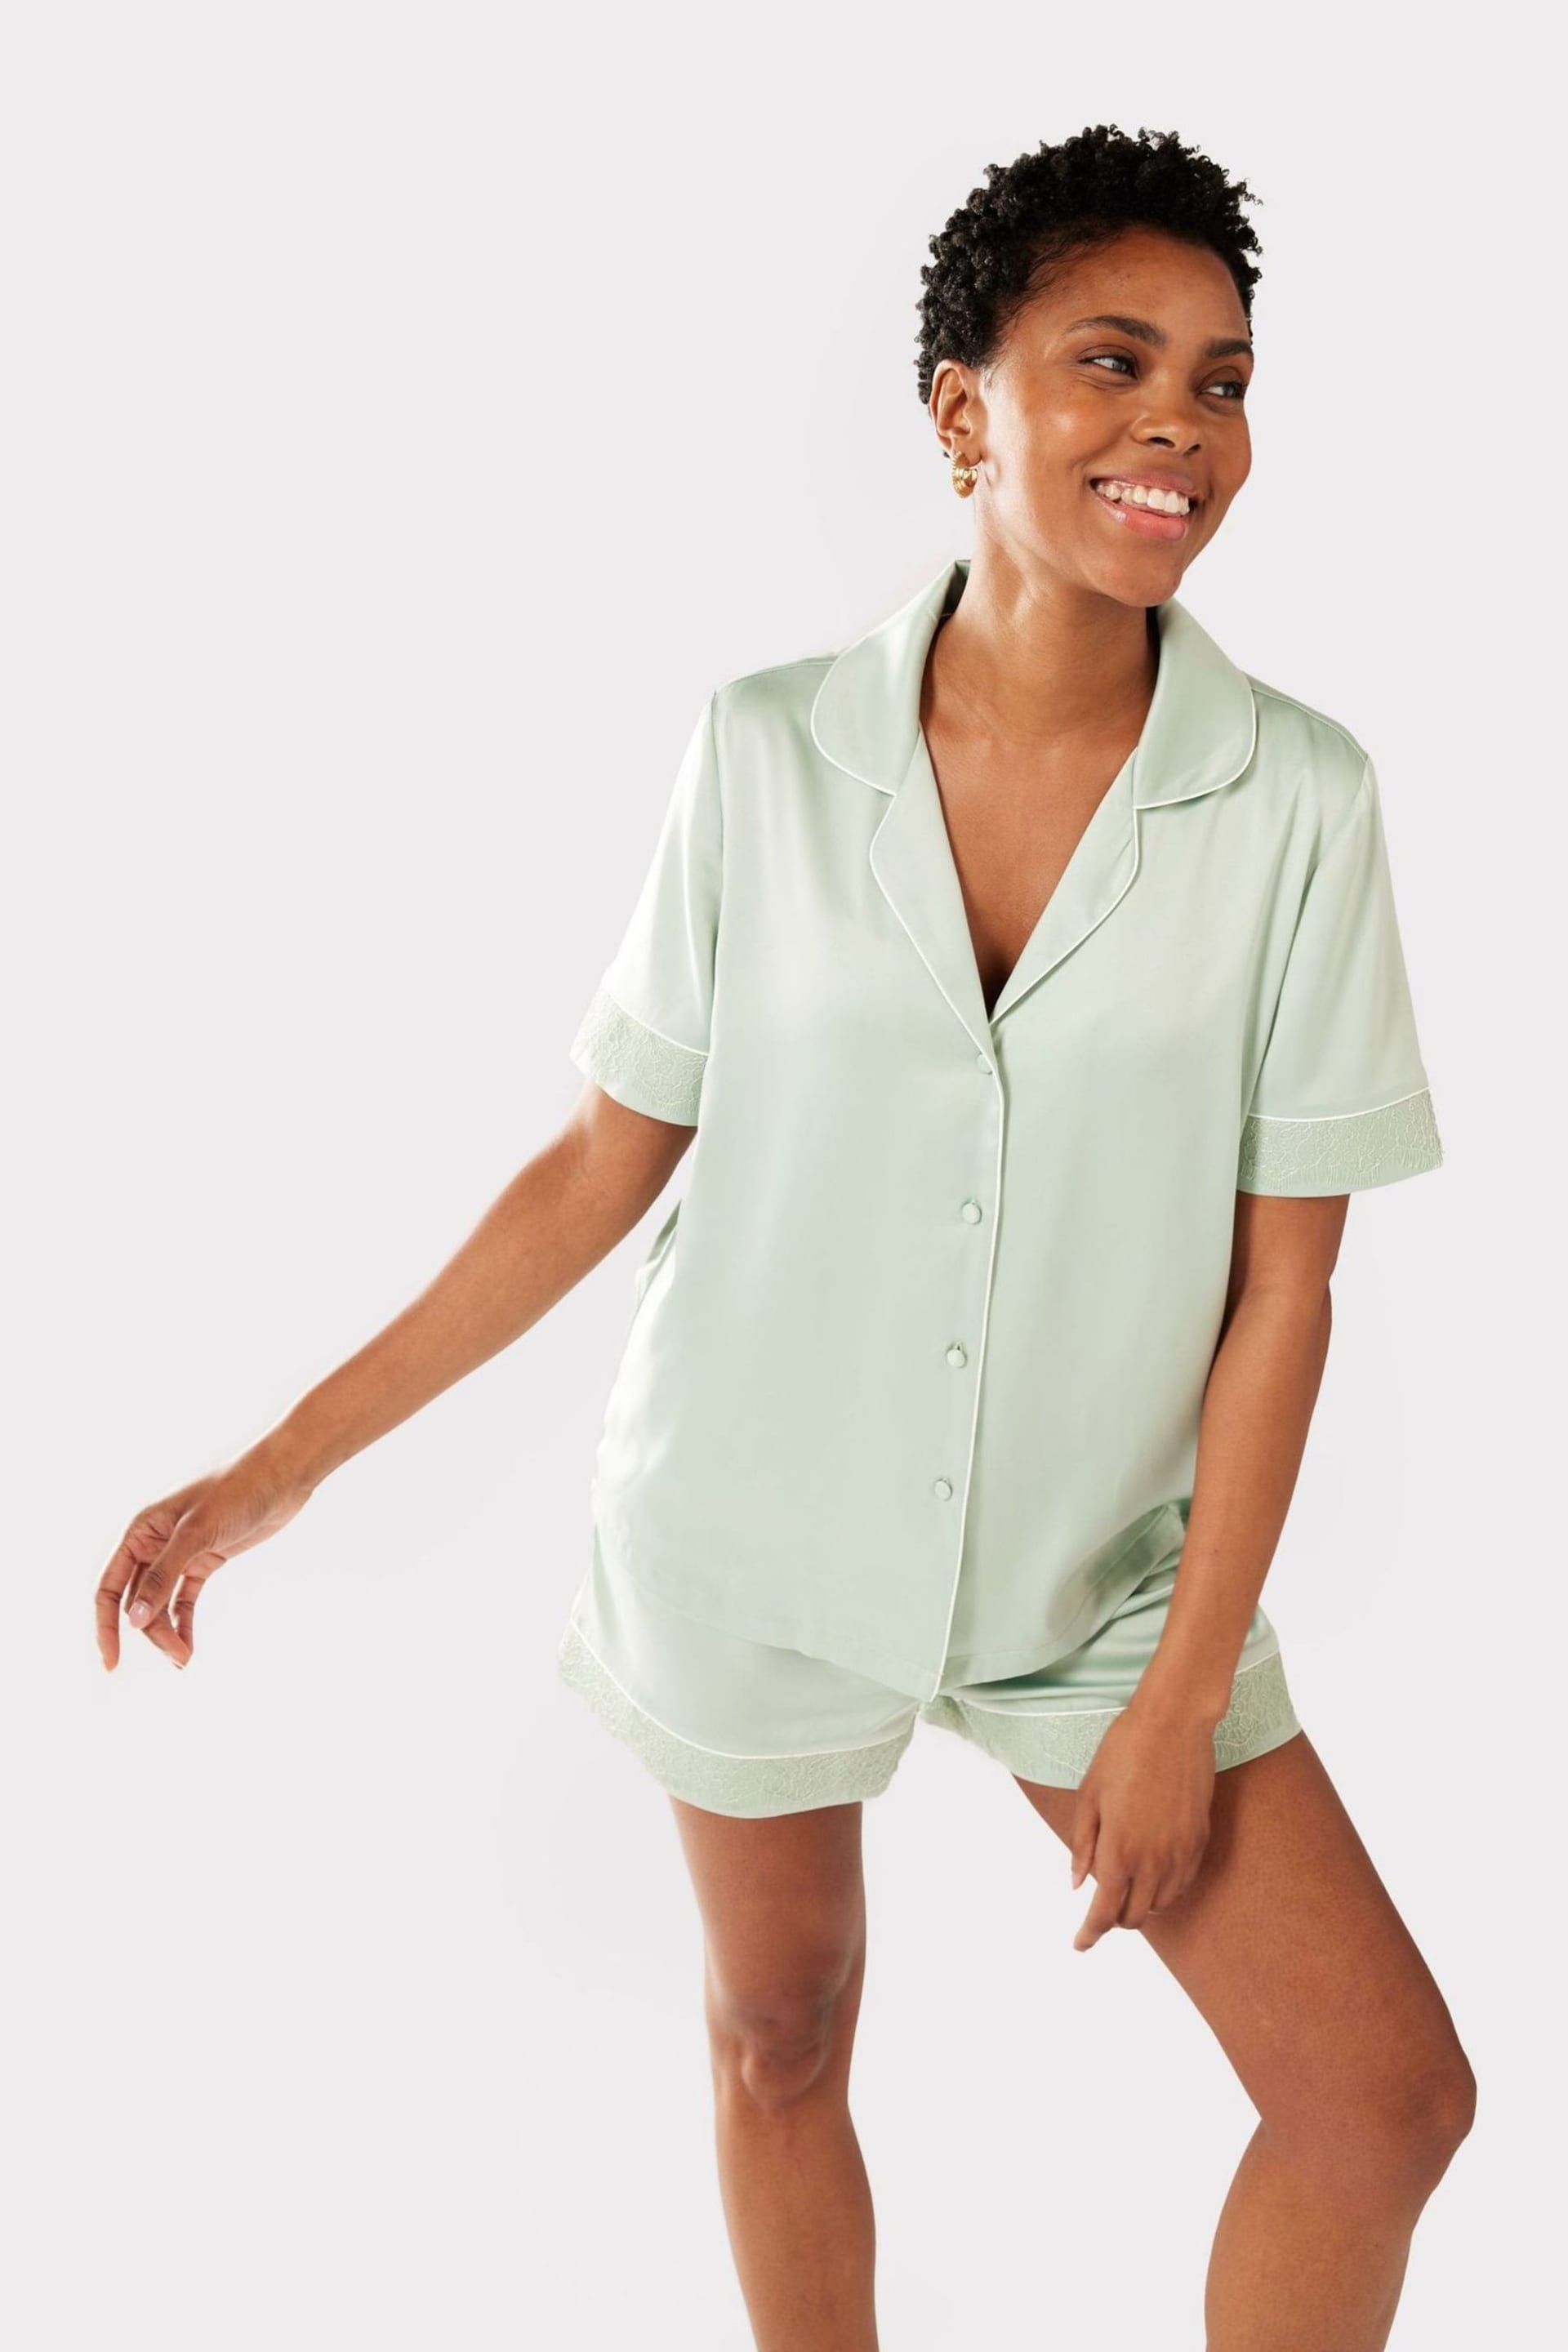 Chelsea Peers Green Satin Lace Trim Short Pyjama Set - Image 4 of 5